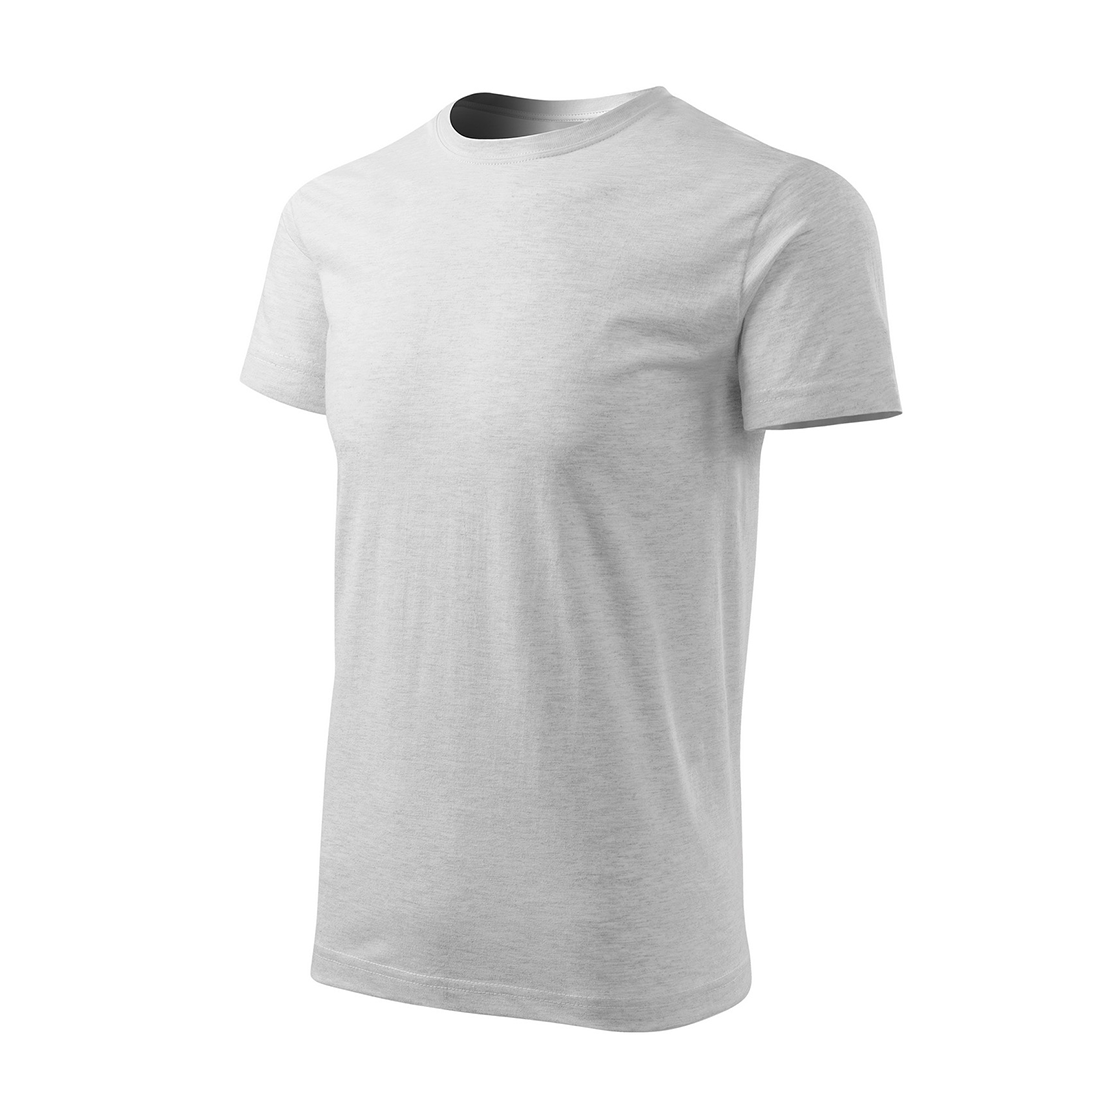 BASIC Men's T-shirt - Safetywear